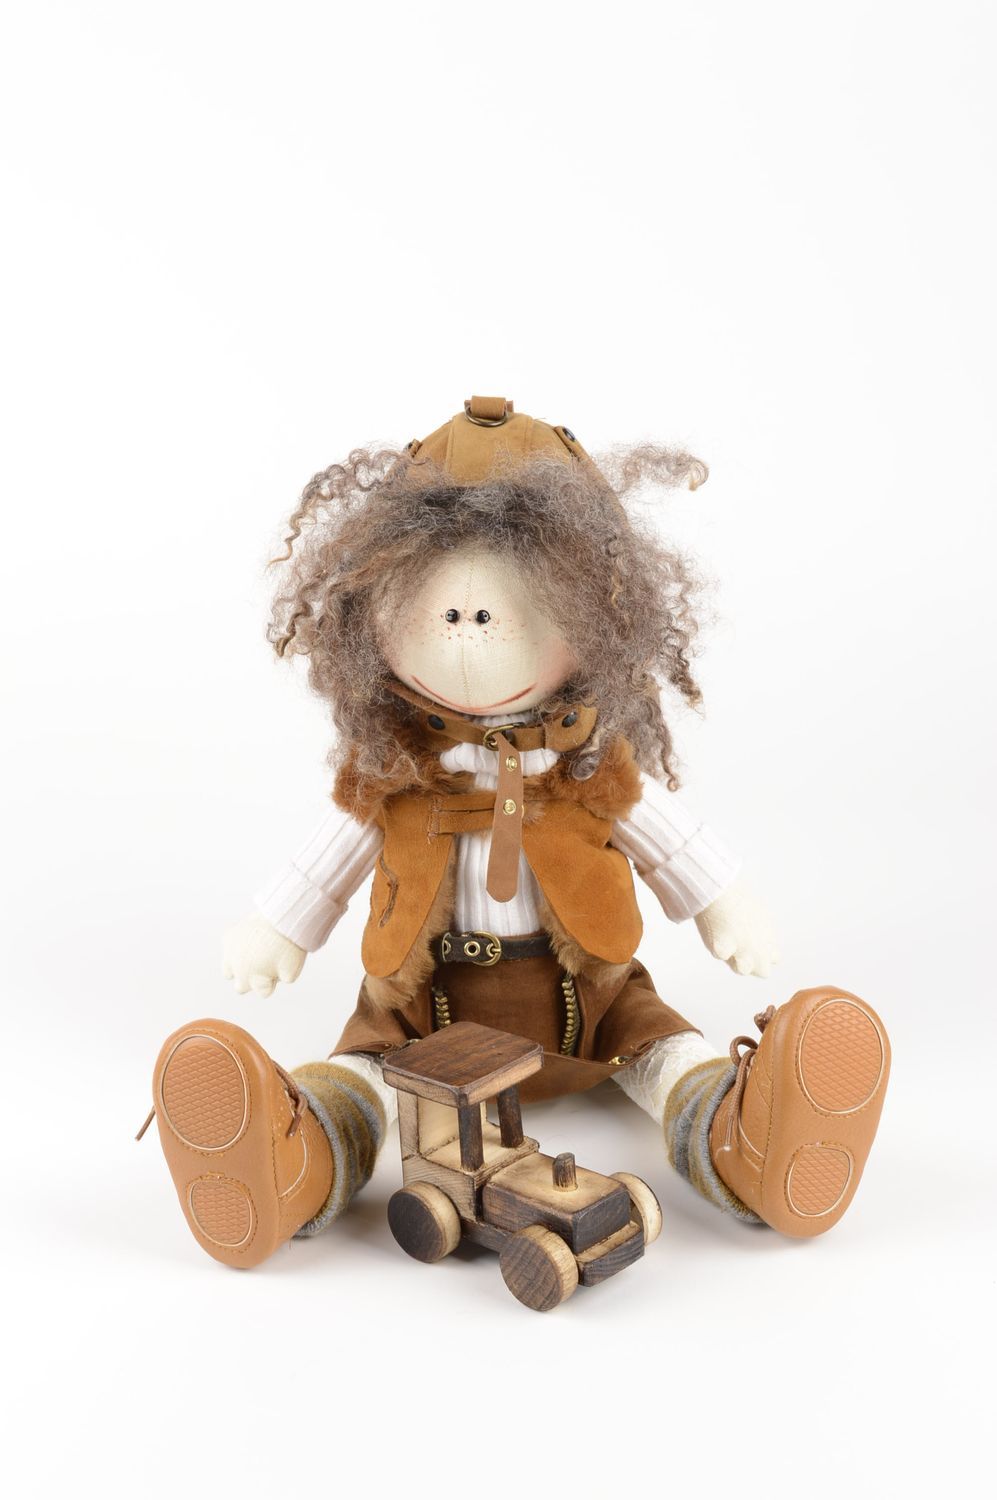 Handmade toy unusual dolls for girls gift ideas soft doll for children photo 5